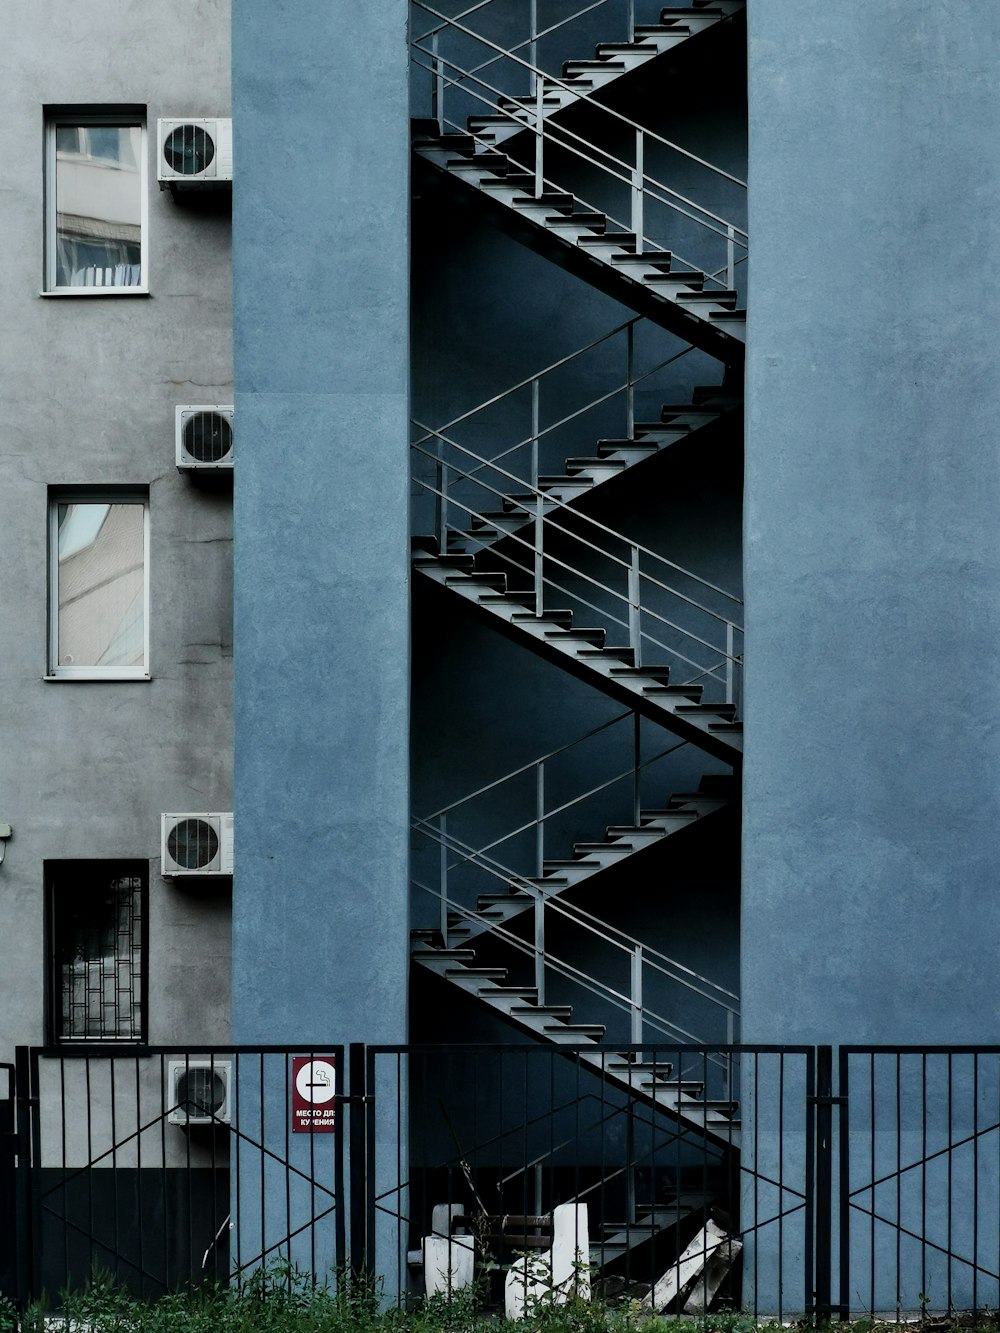 blue concrete building with white metal railings